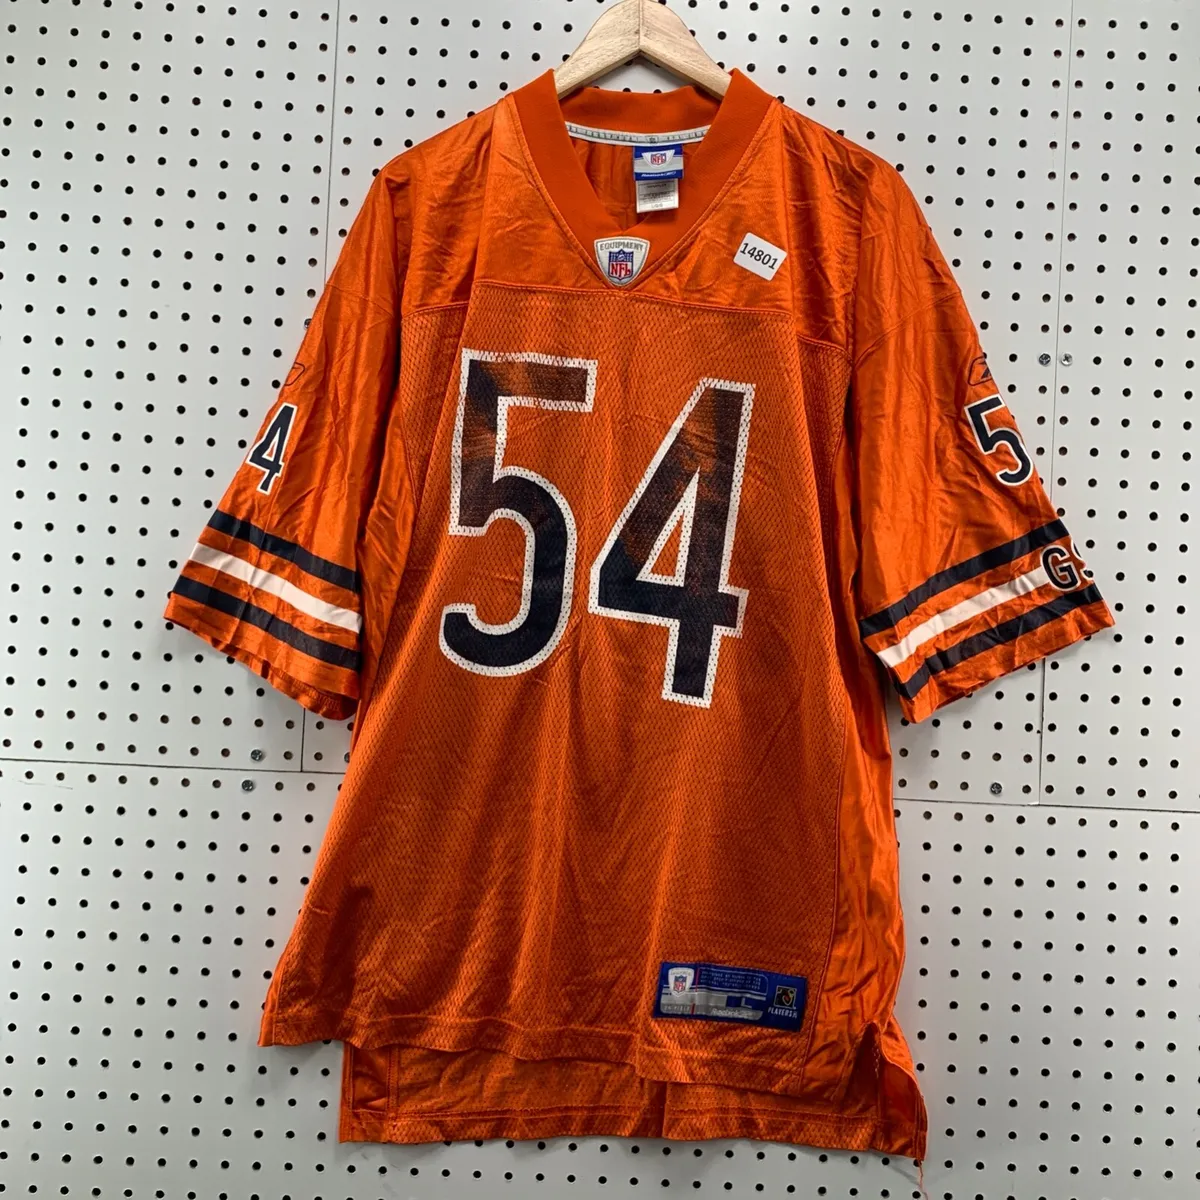 Chicago Jersey Brian #54 NFL Large Reebok | eBay